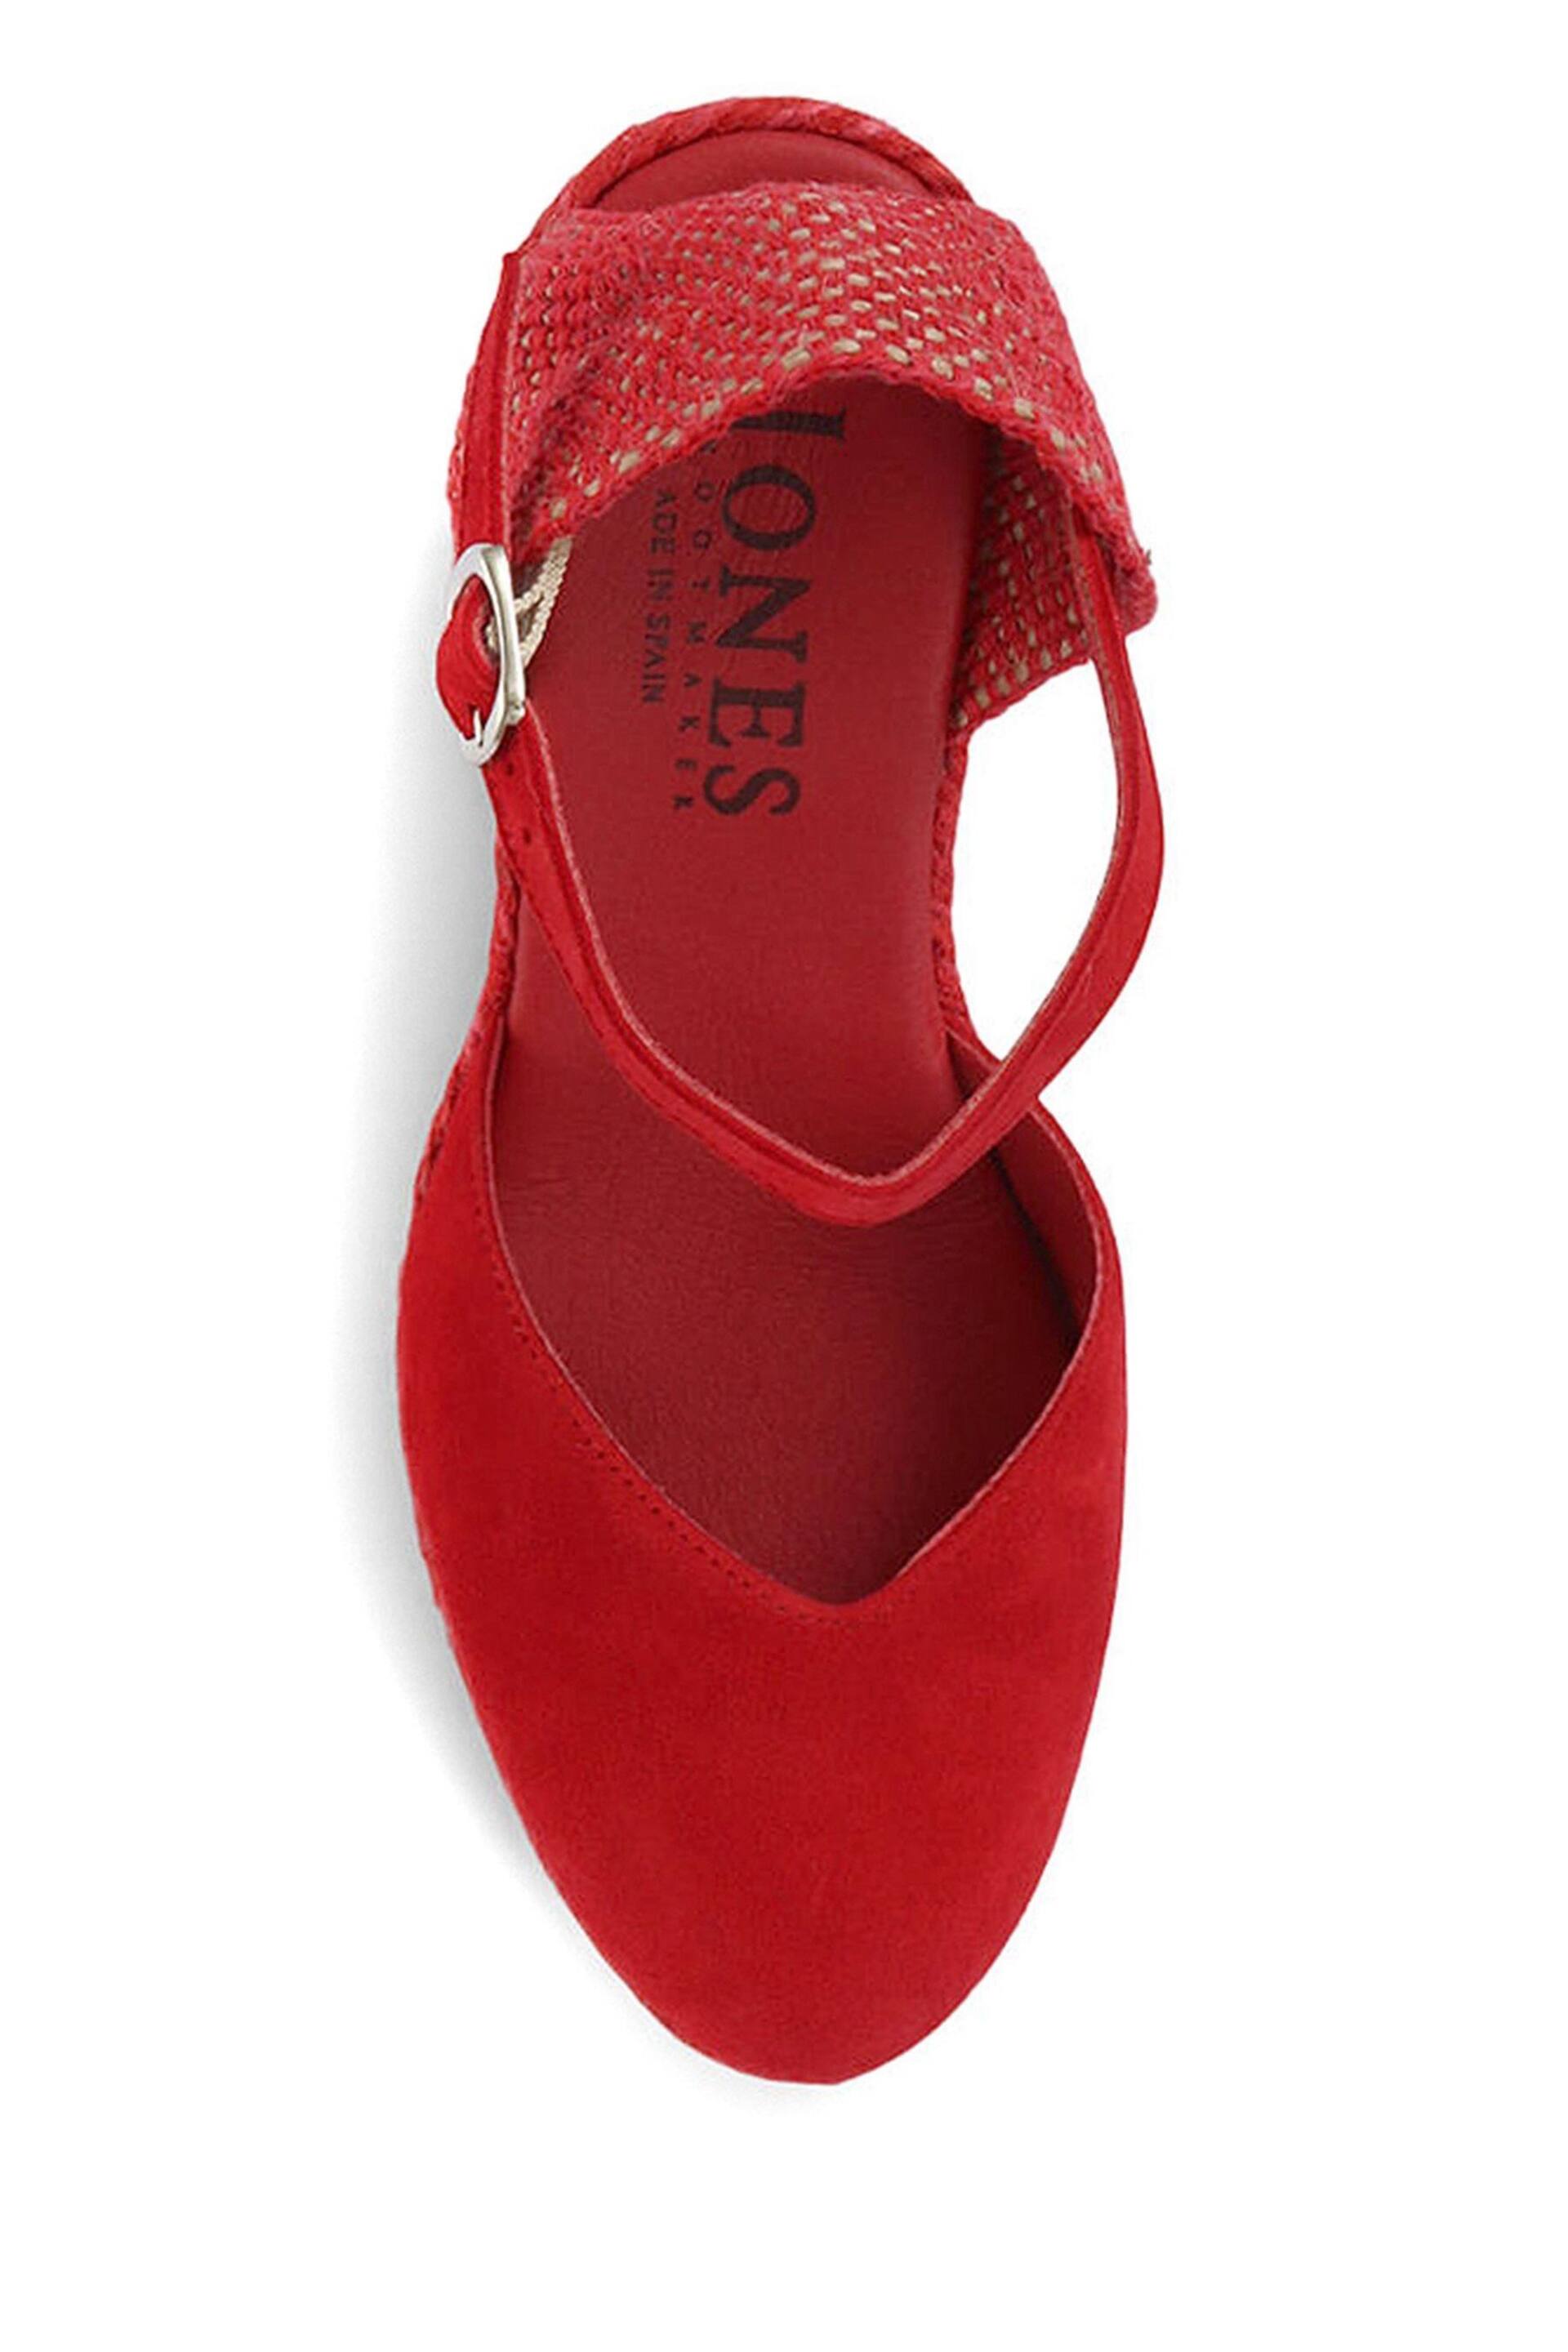 Jones Bootmaker Arabella Wedge Shoes - Image 4 of 5